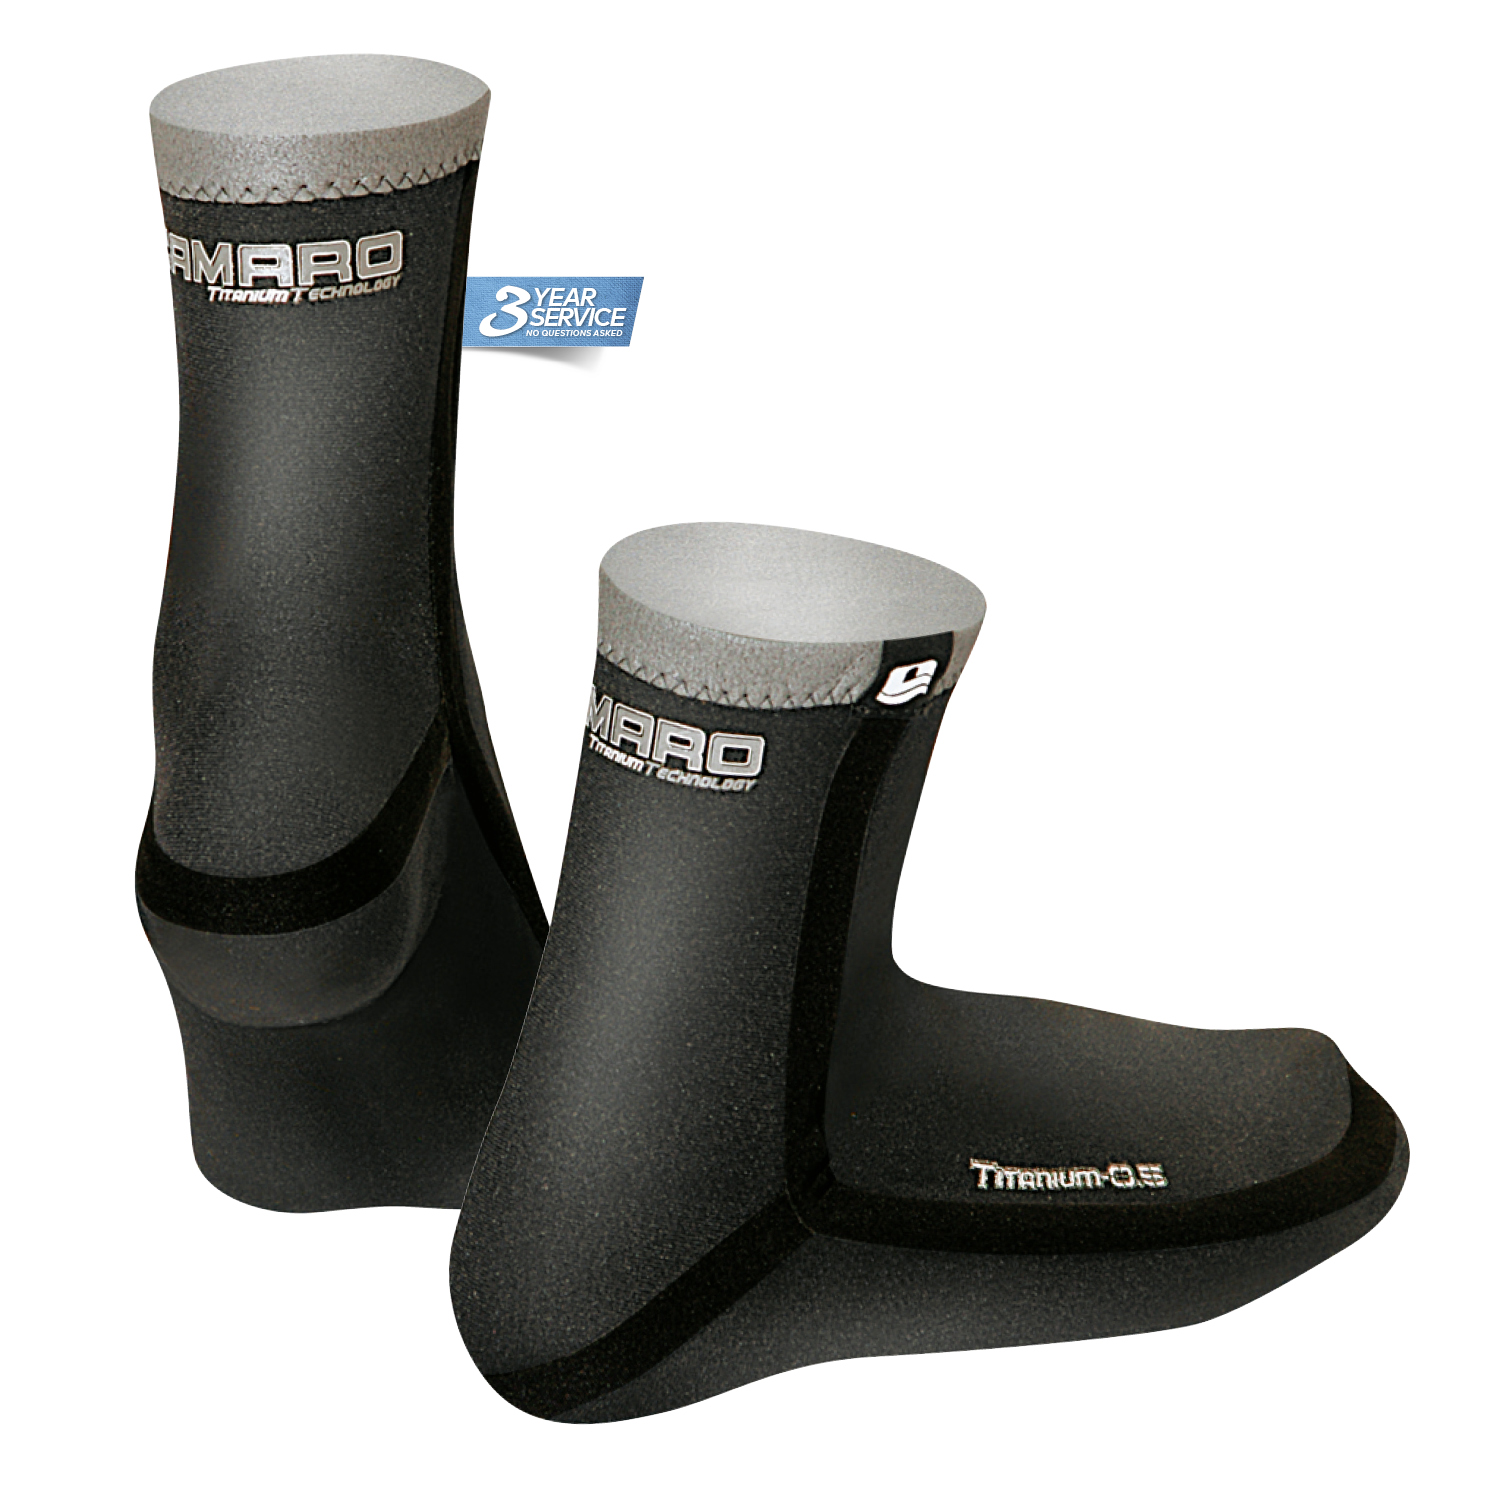 Titanium Seamless socks 0.5mm